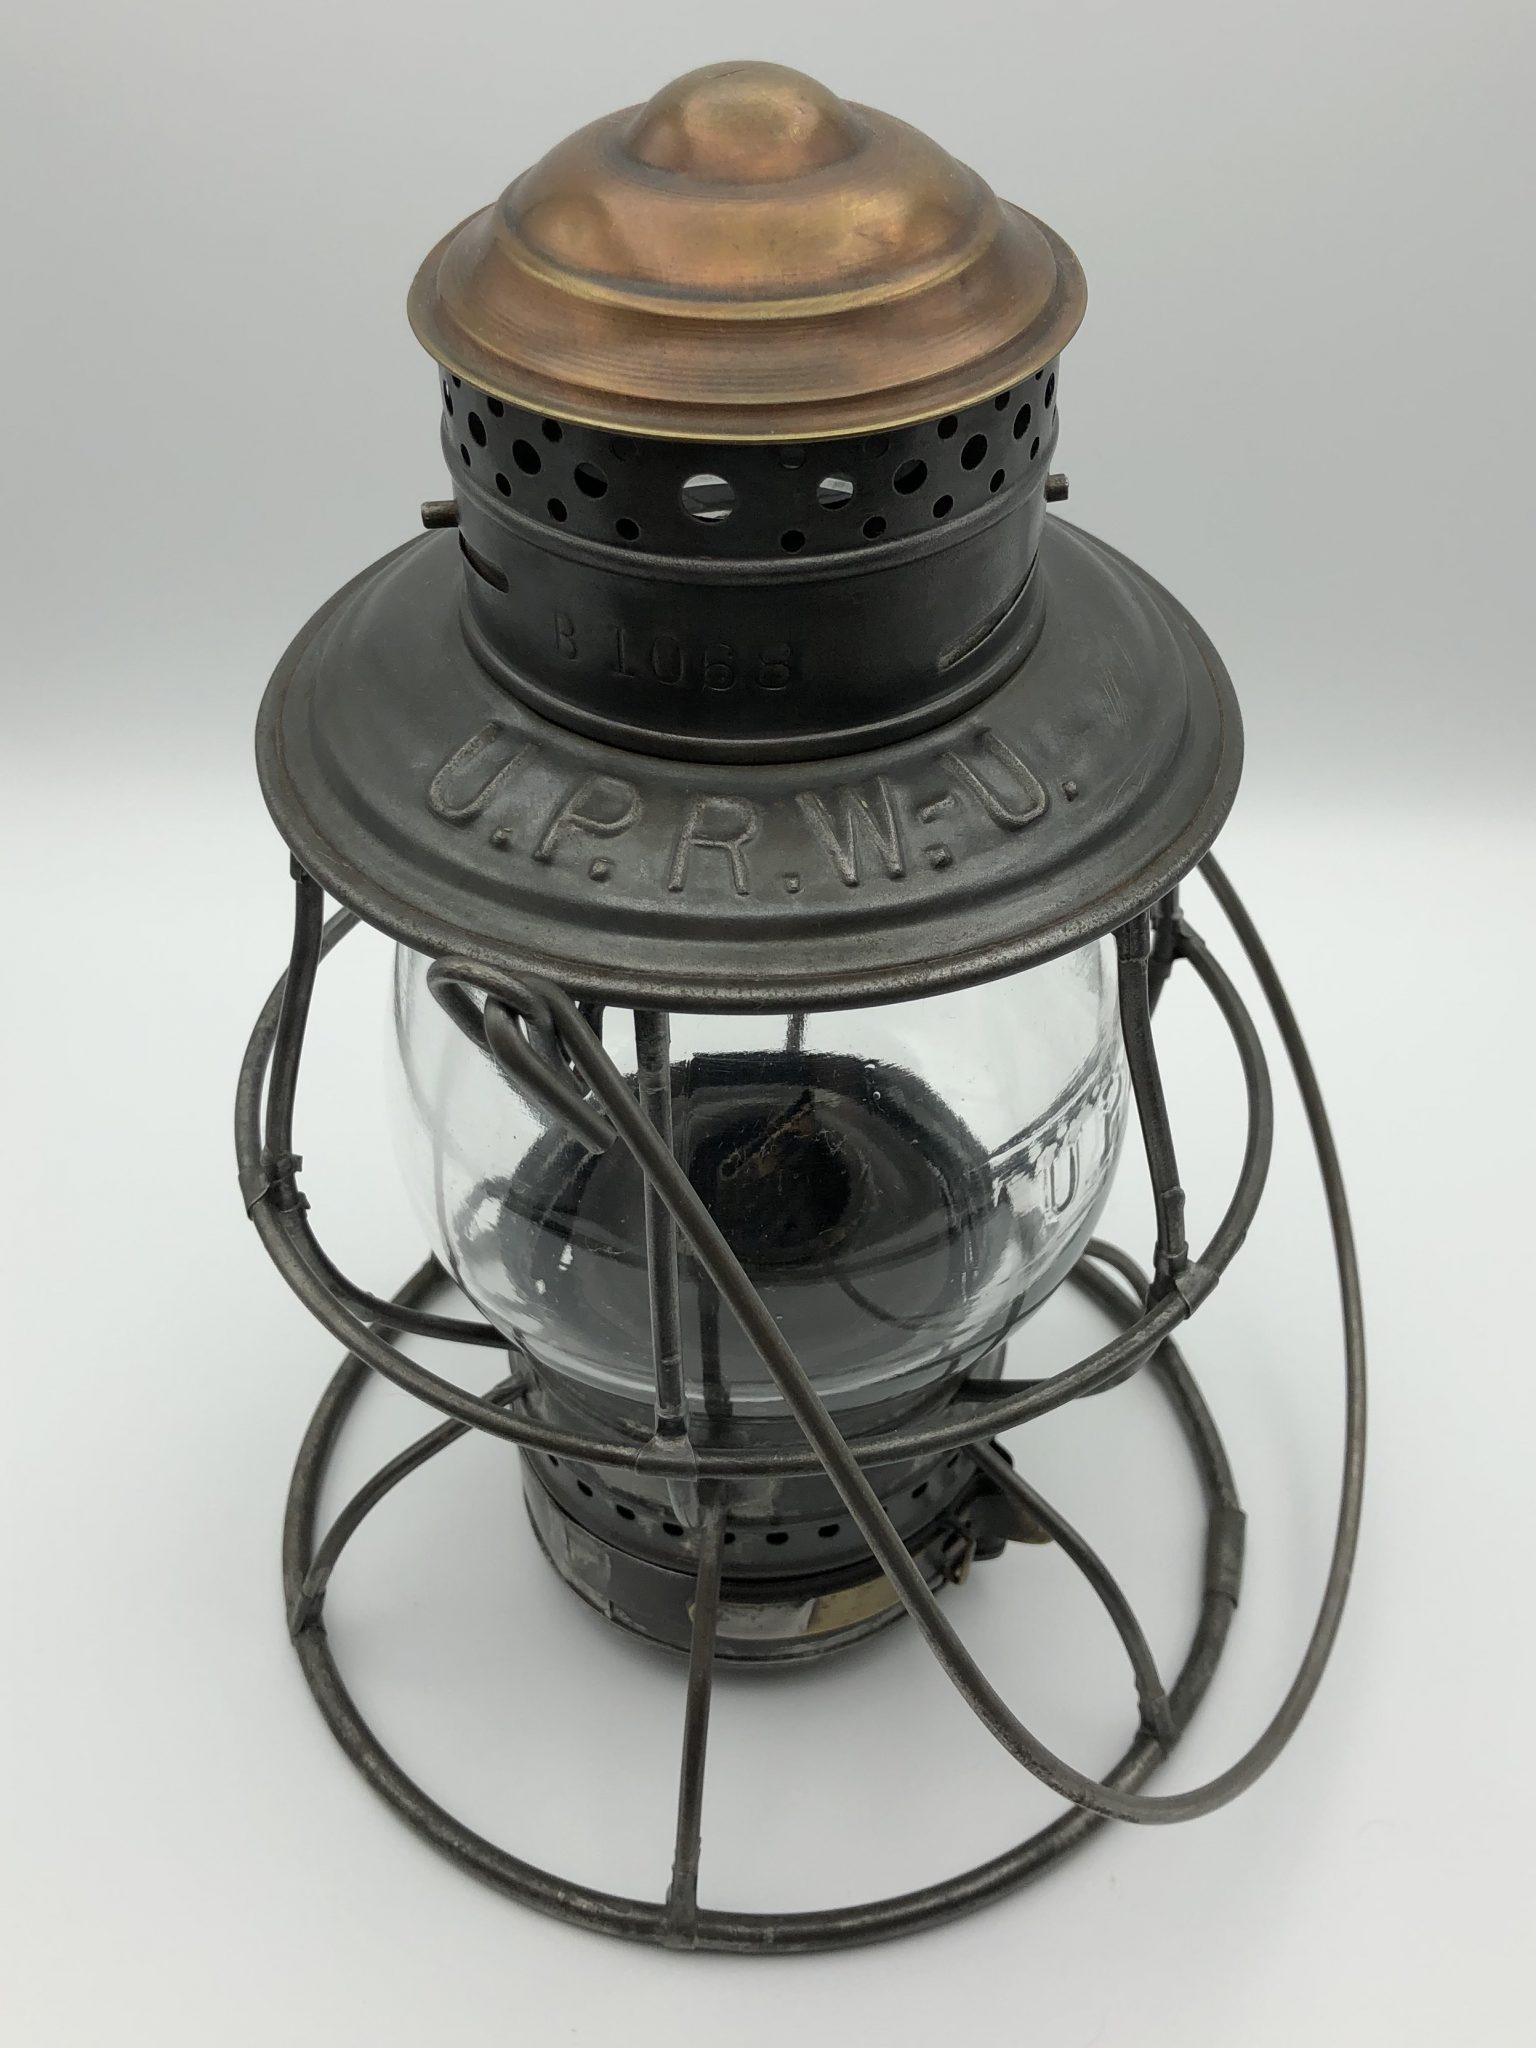 uprw-u railroad lantern-union pacific railway-utah division-railroadiana-antique